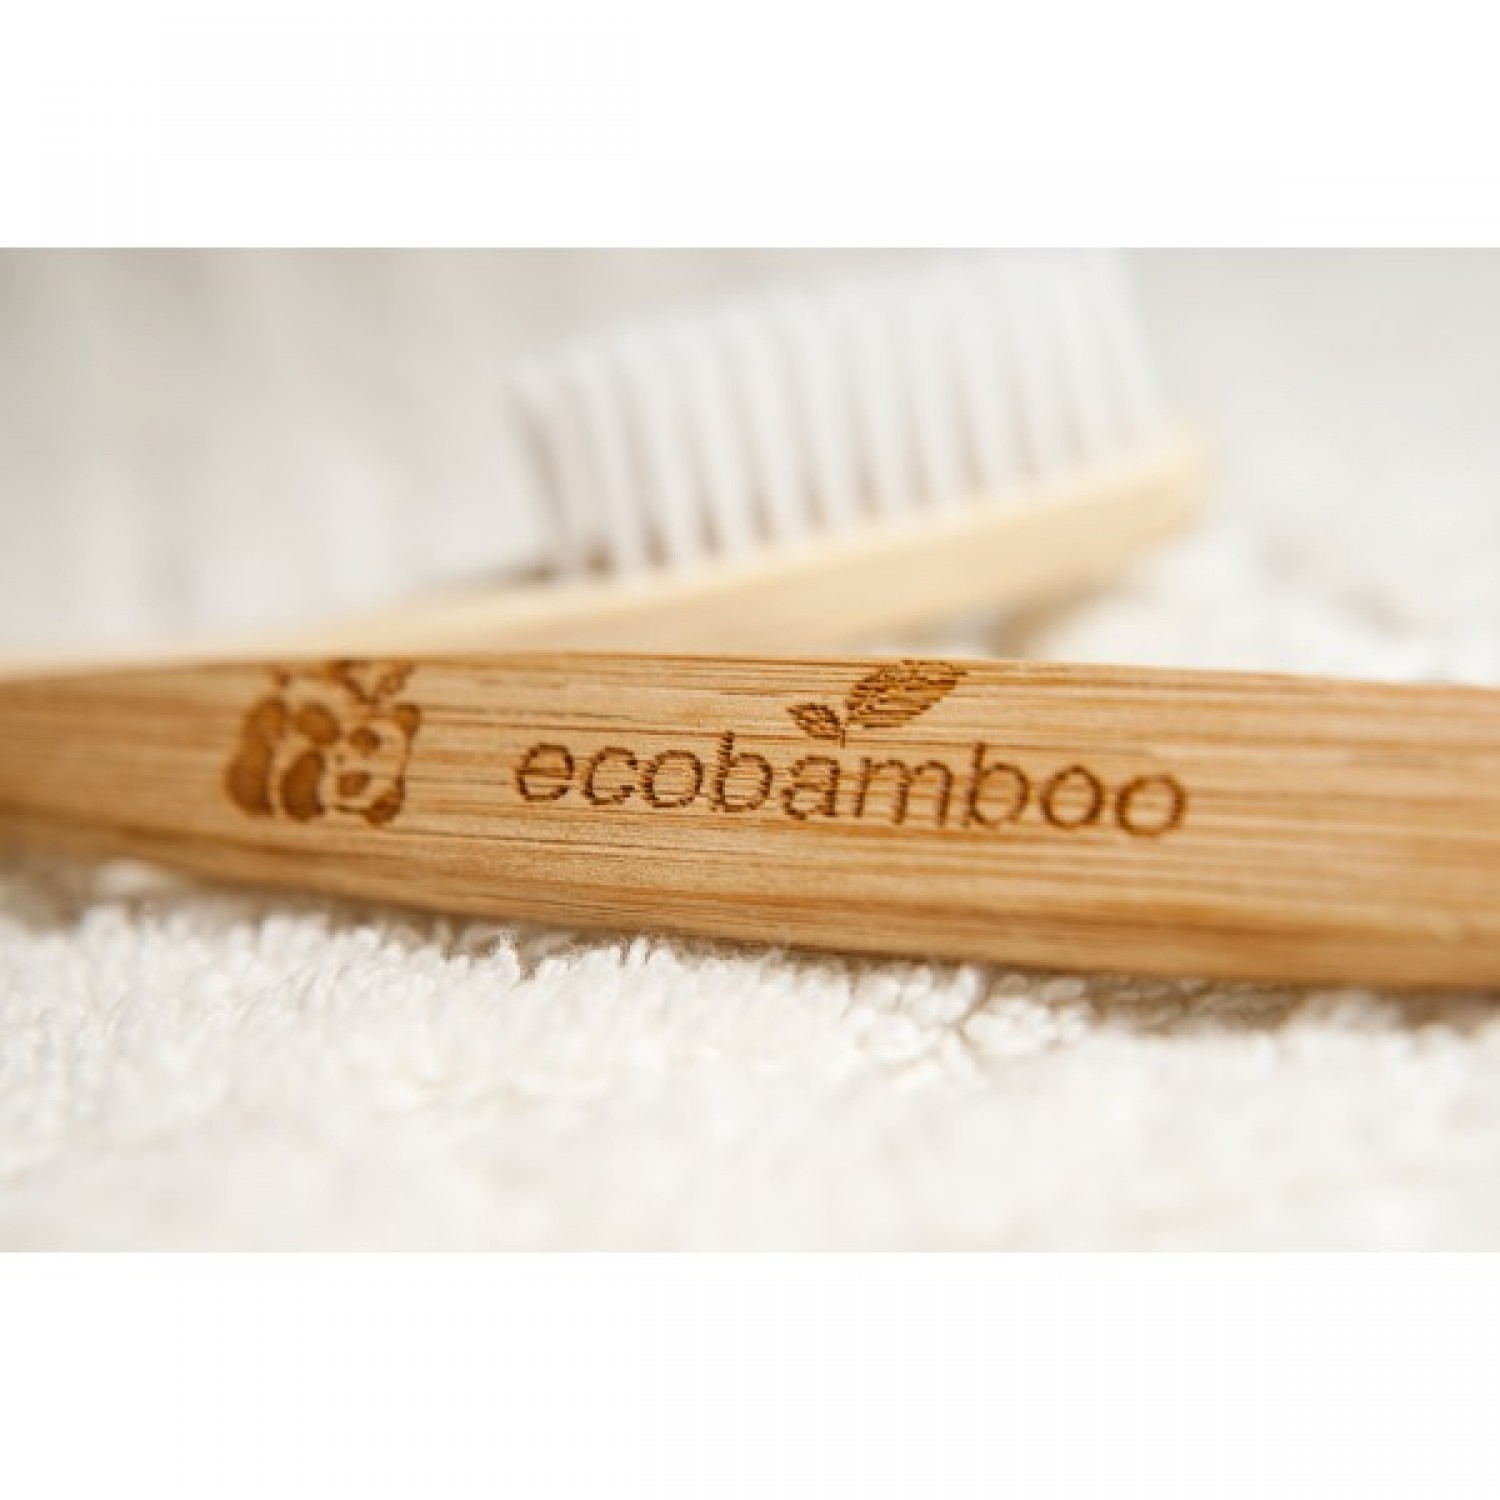 Bio Kinder-Zahnbürste aus Bambus | ecobamboo